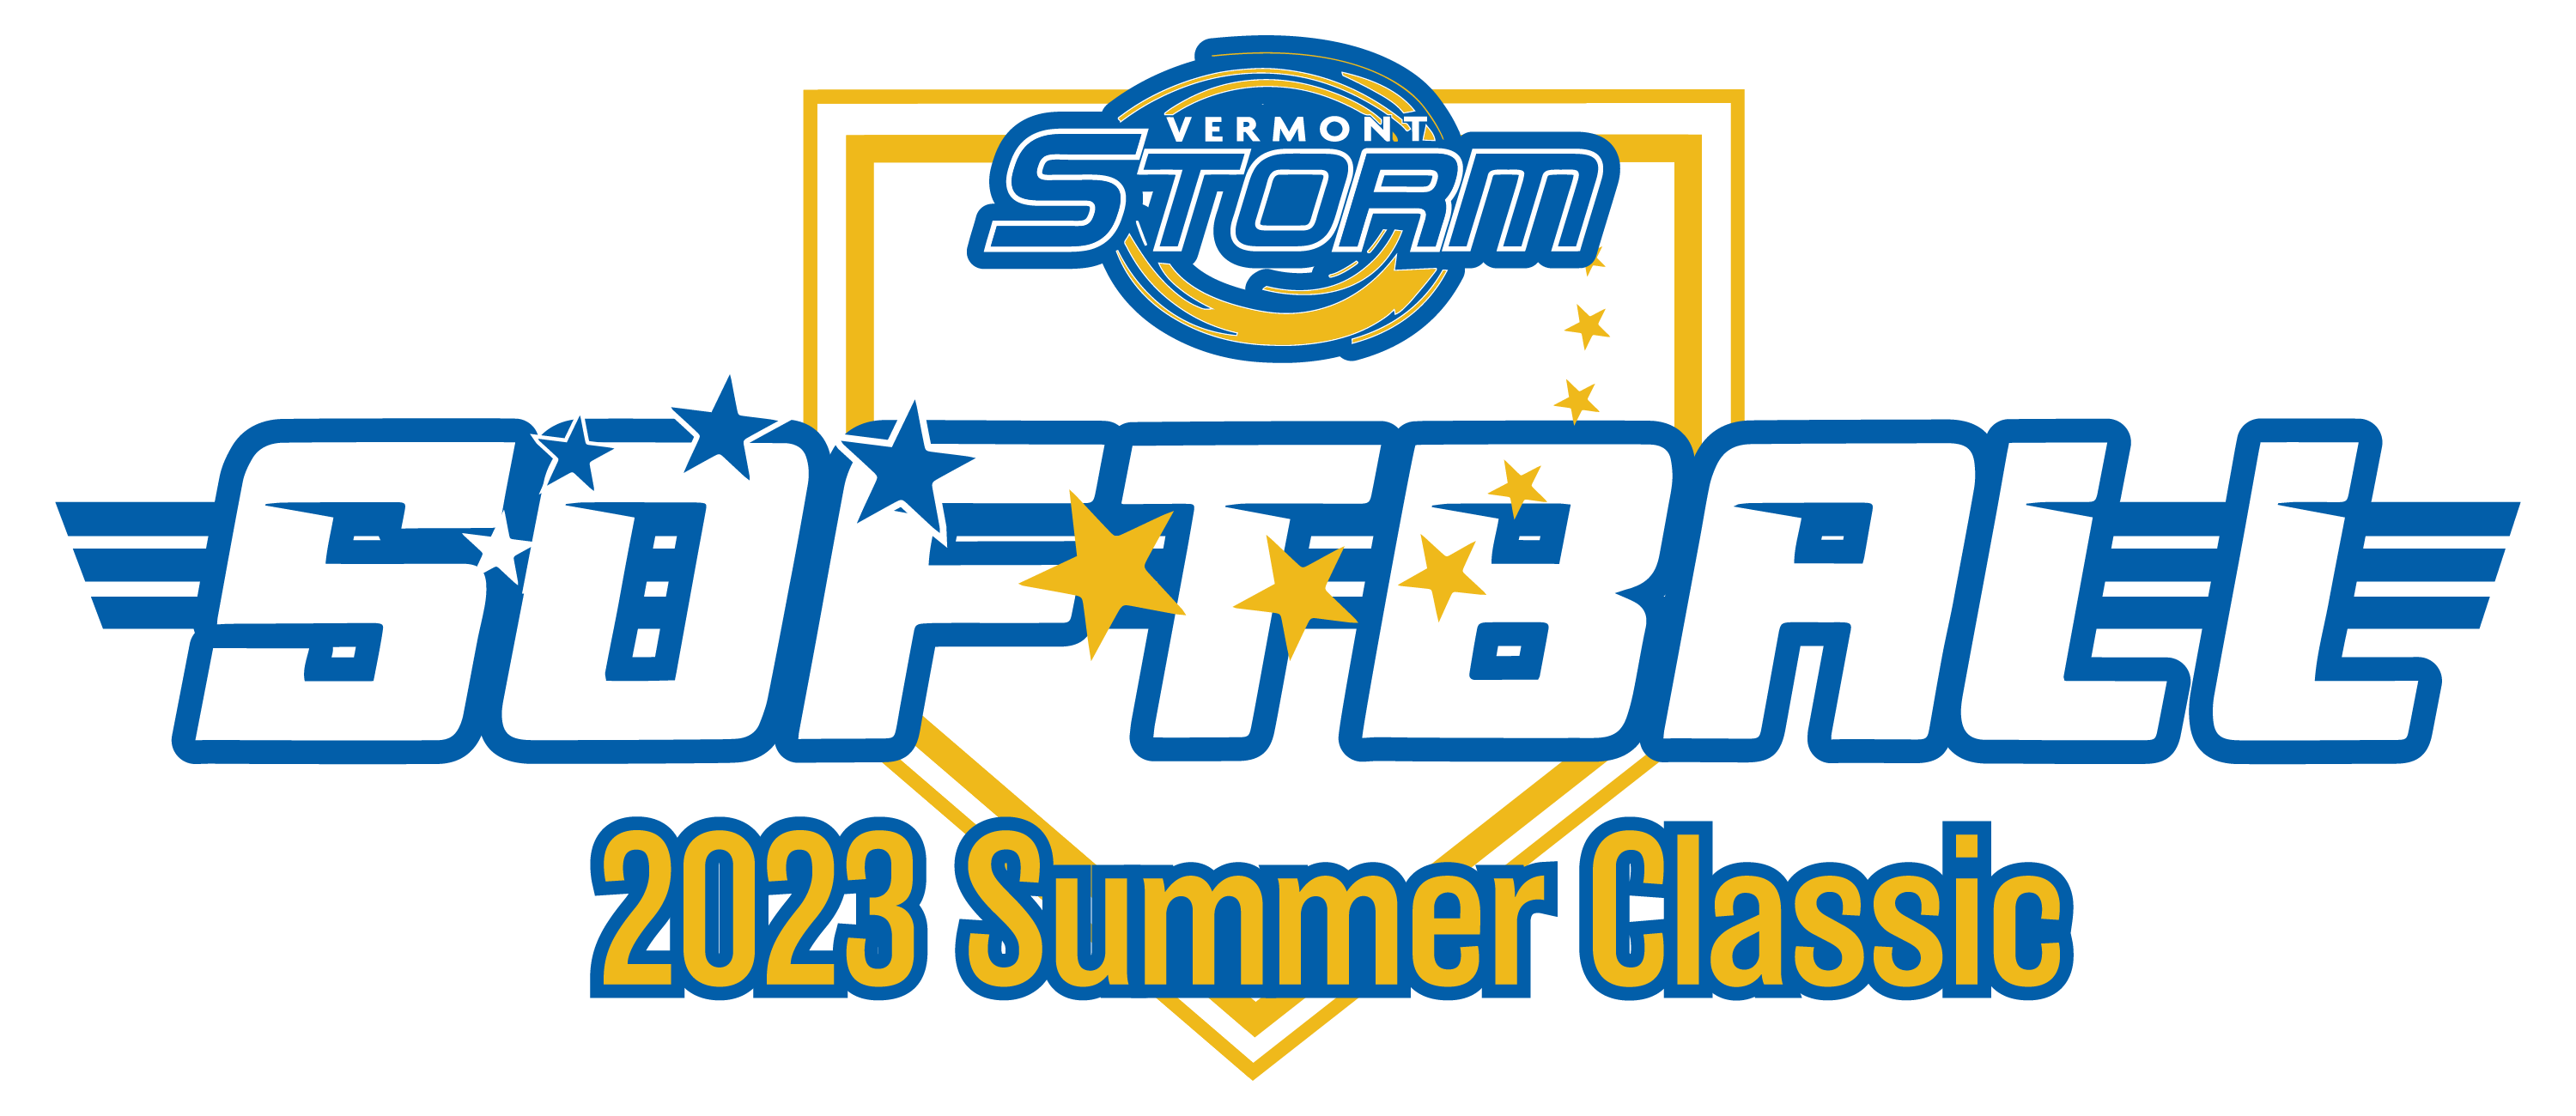 VT Storm Softball Logo (2023)-01